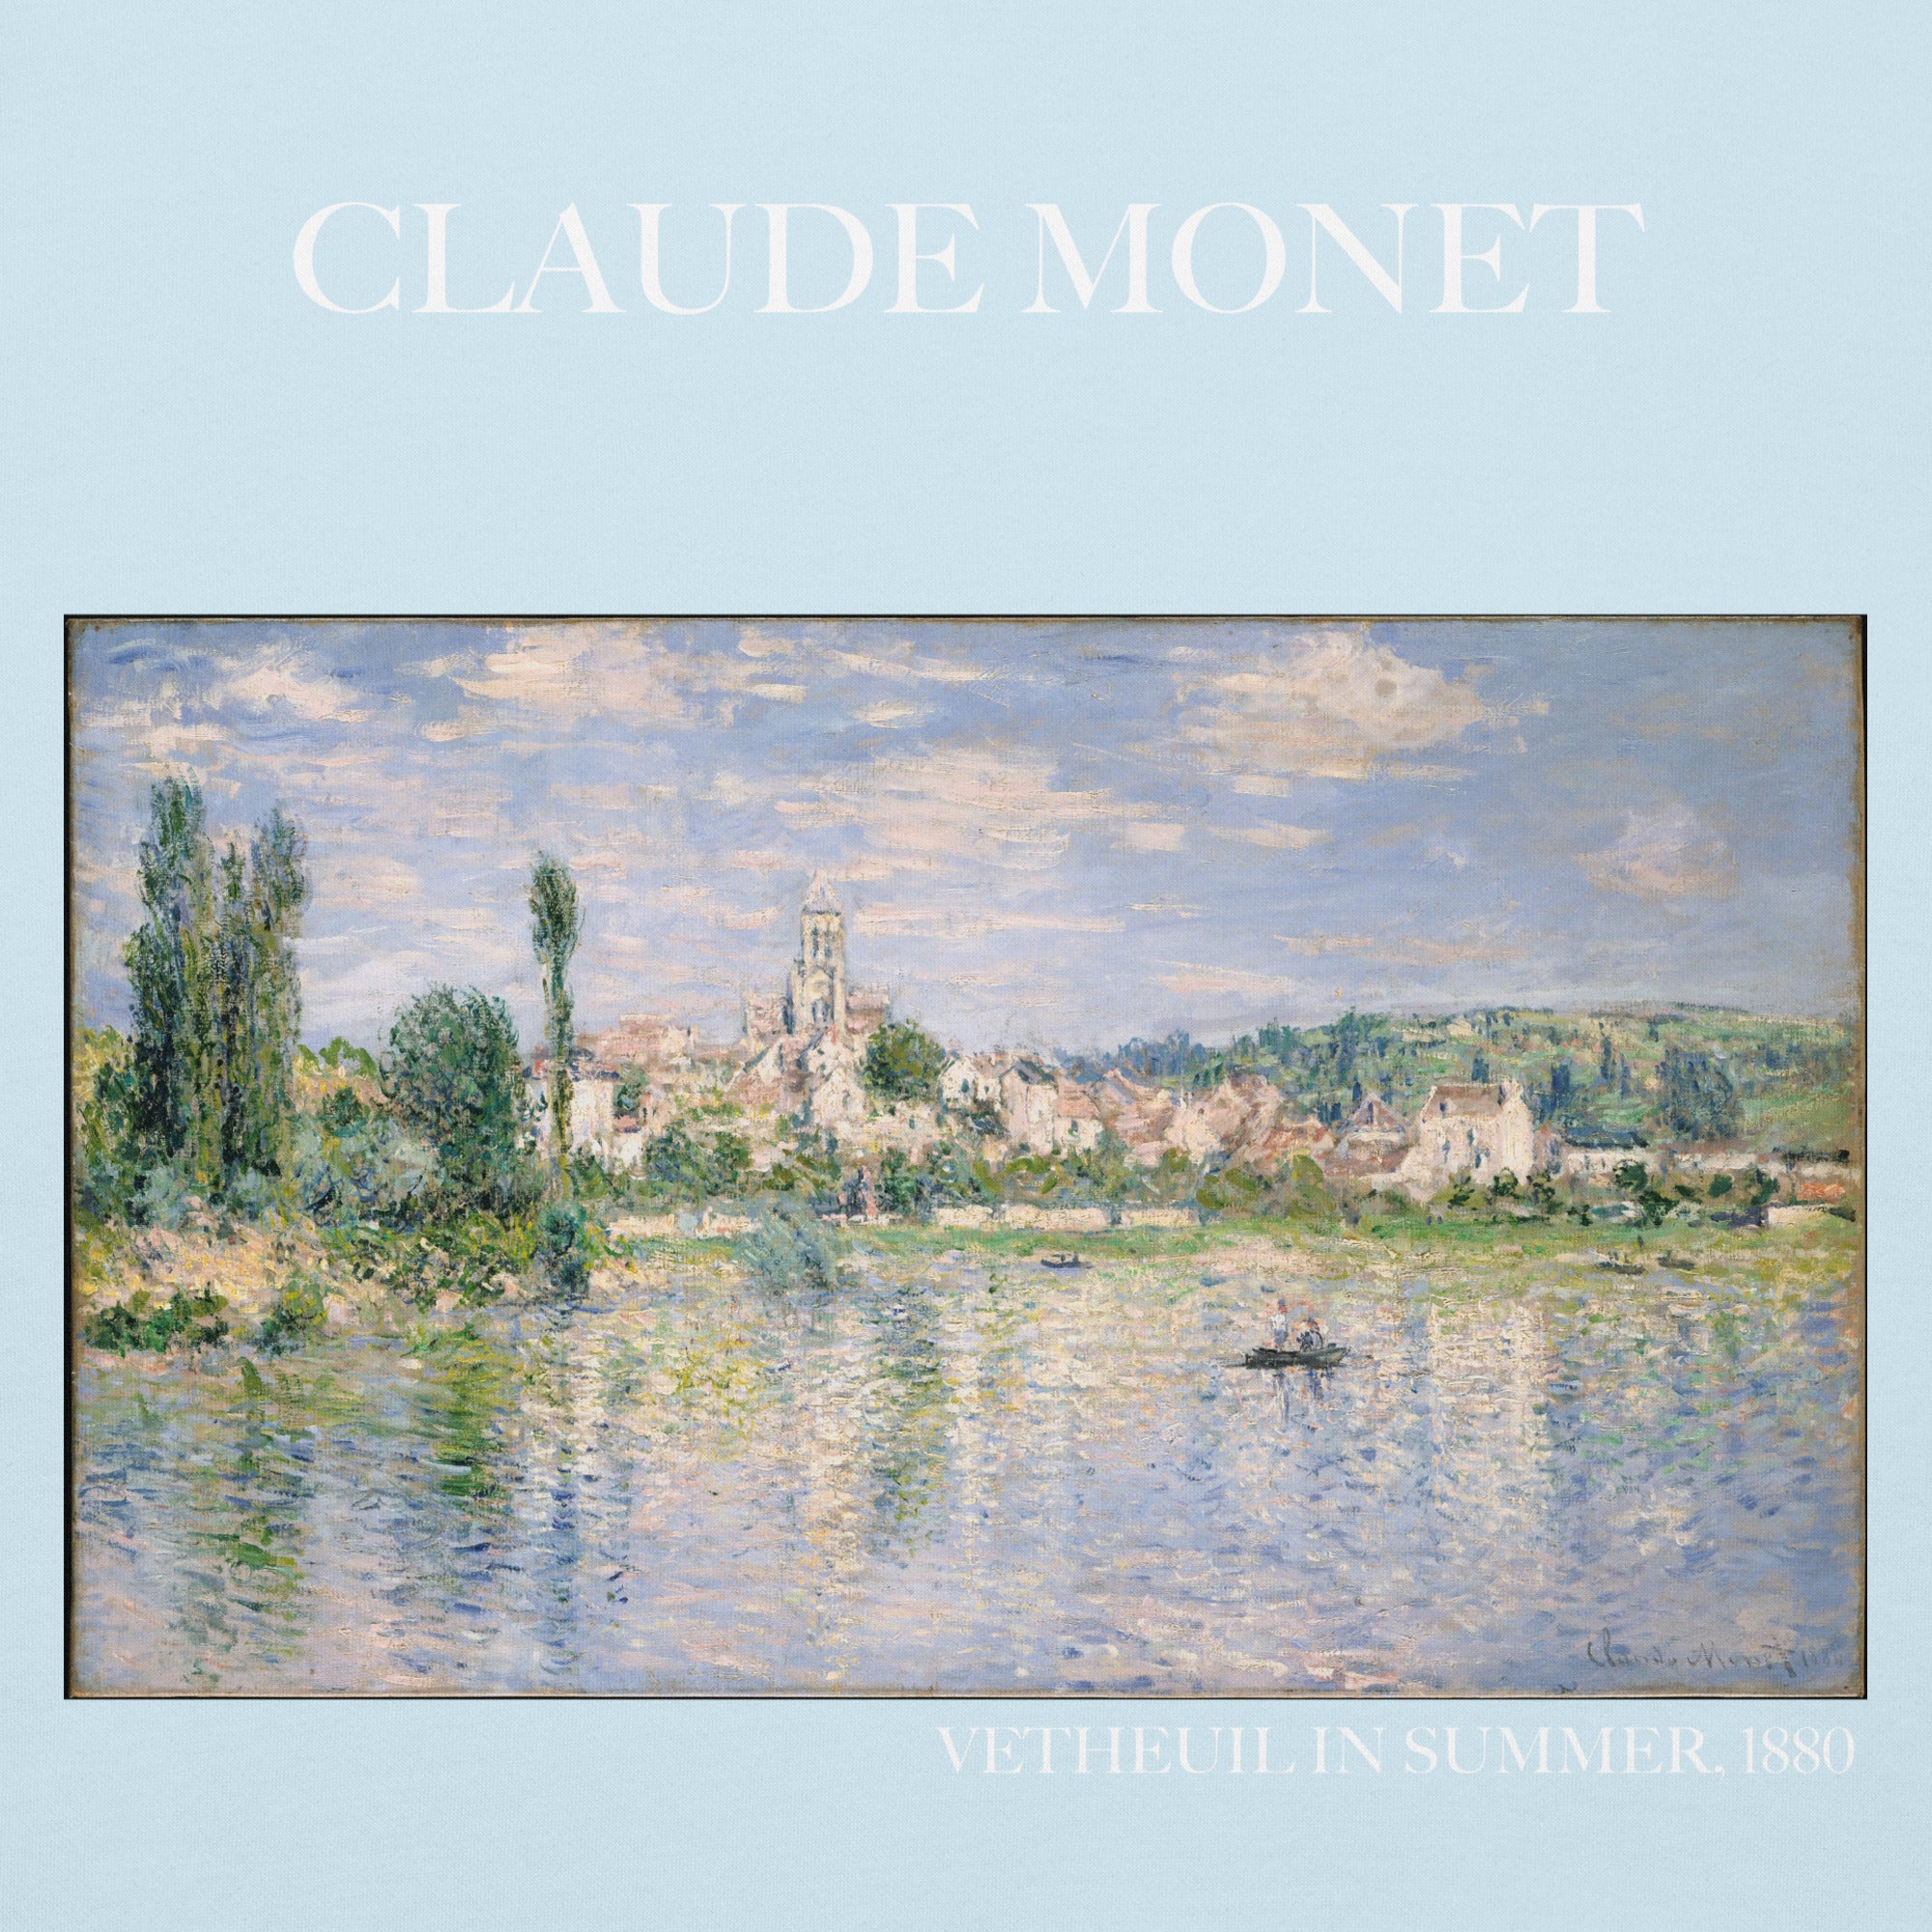 Claude Monet 'Vetheuil in Summer' Famous Painting Hoodie | Unisex Premium Art Hoodie